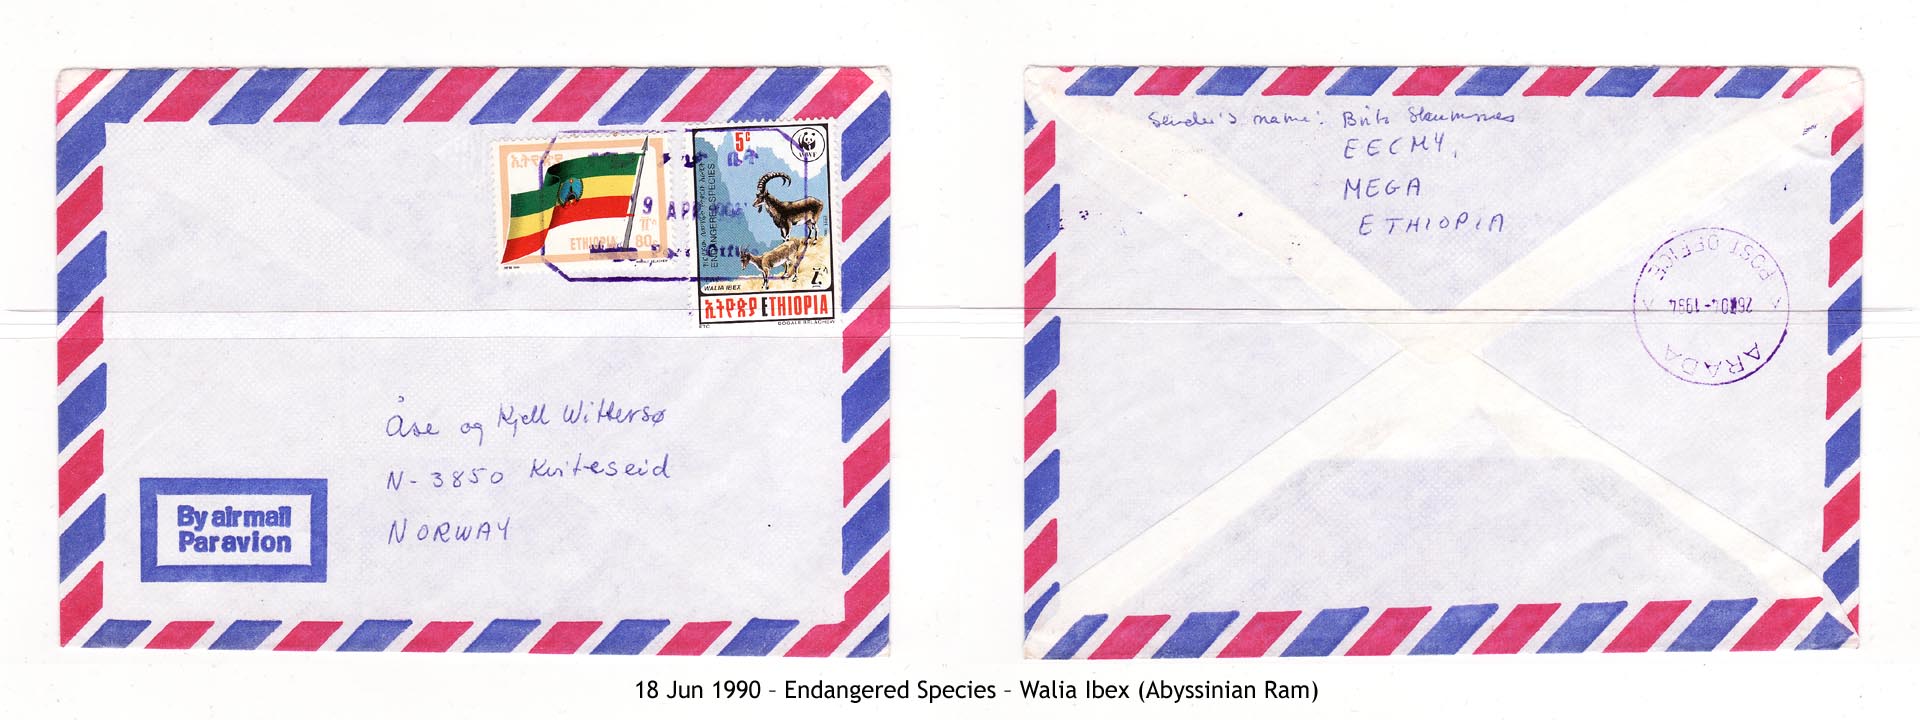 19900618 – Endangered Species – Walia Ibex (Abyssinian Ram)